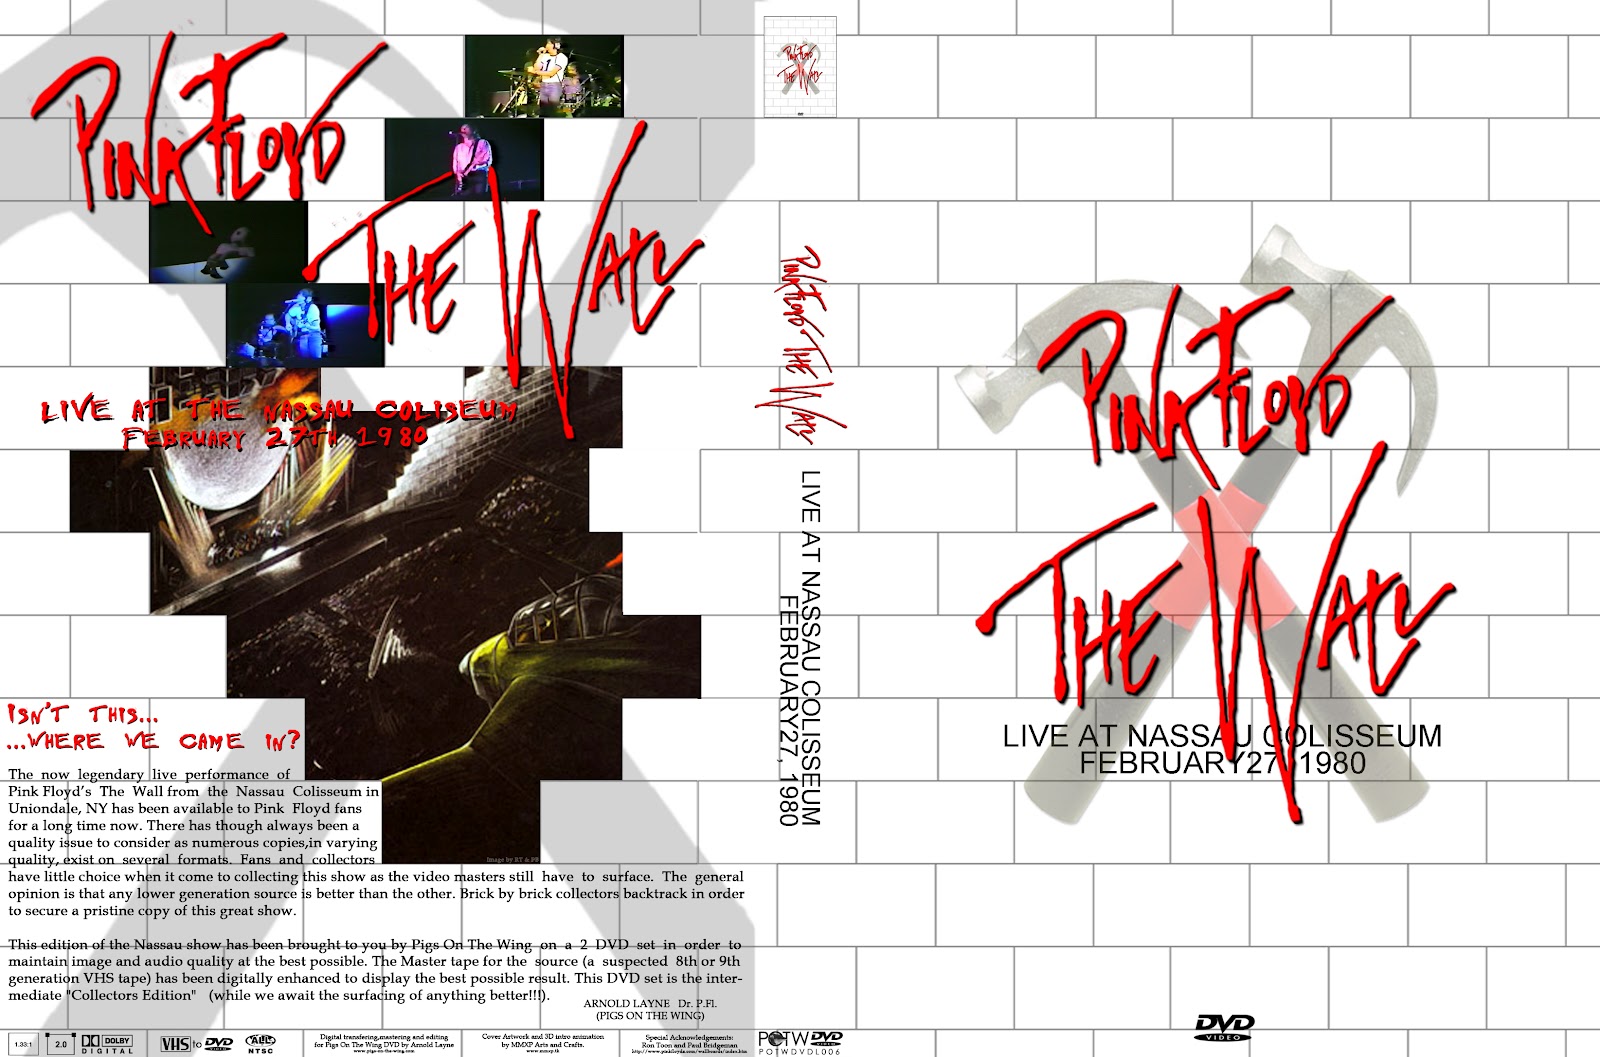 Come collection. Альбом стена Пинк Флойд. Обложка CD Pink Floyd the Wall. Пинк Флойд стена обложка альбома. Pink Floyd DVD.